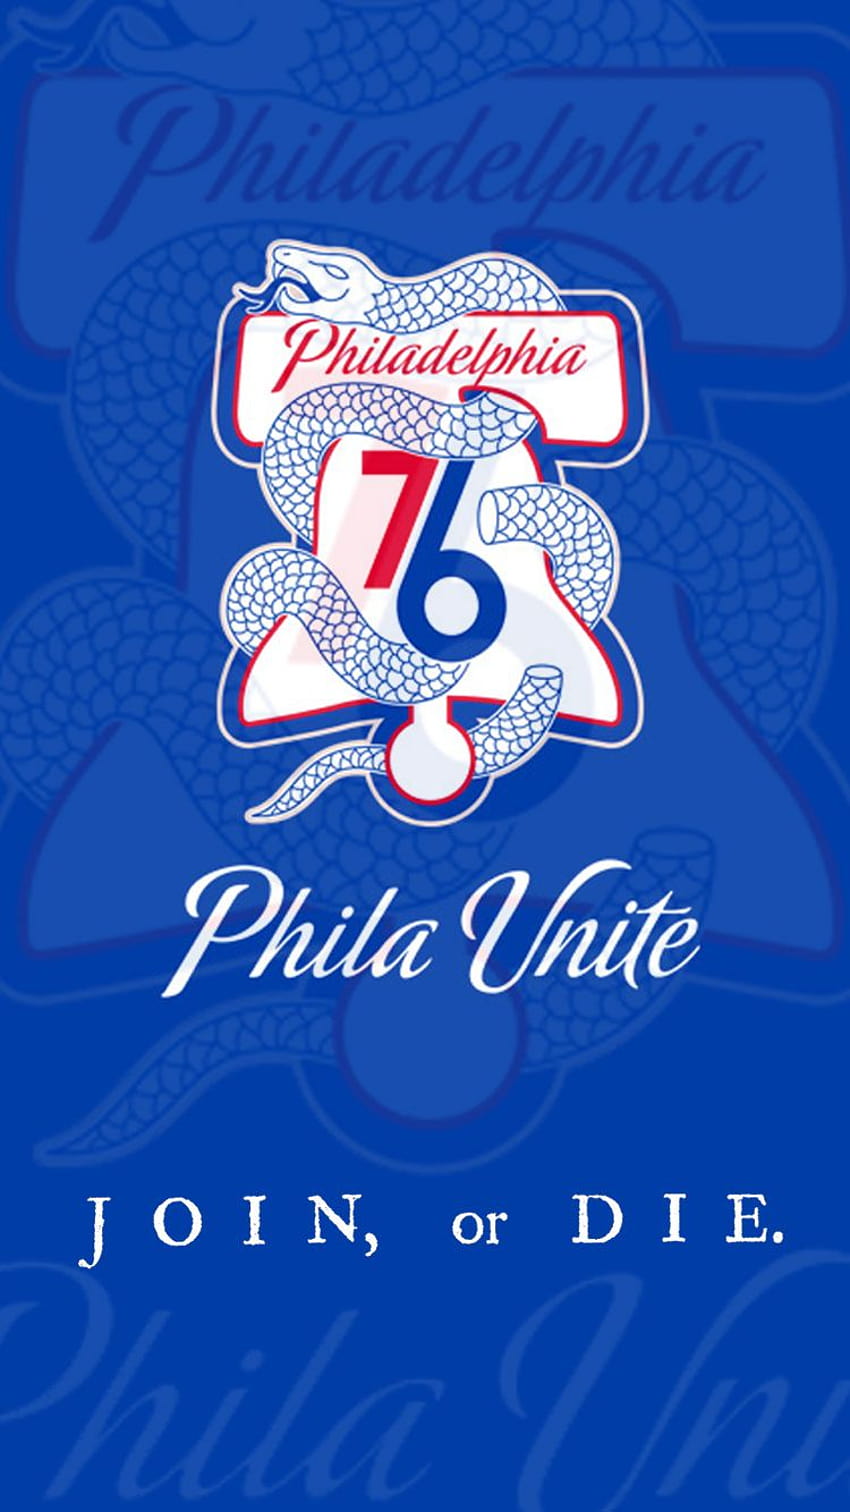 7 Philadelphia 76ers iPhone wallpapers ideas  basketball wallpaper nba  wallpapers philadelphia 76ers